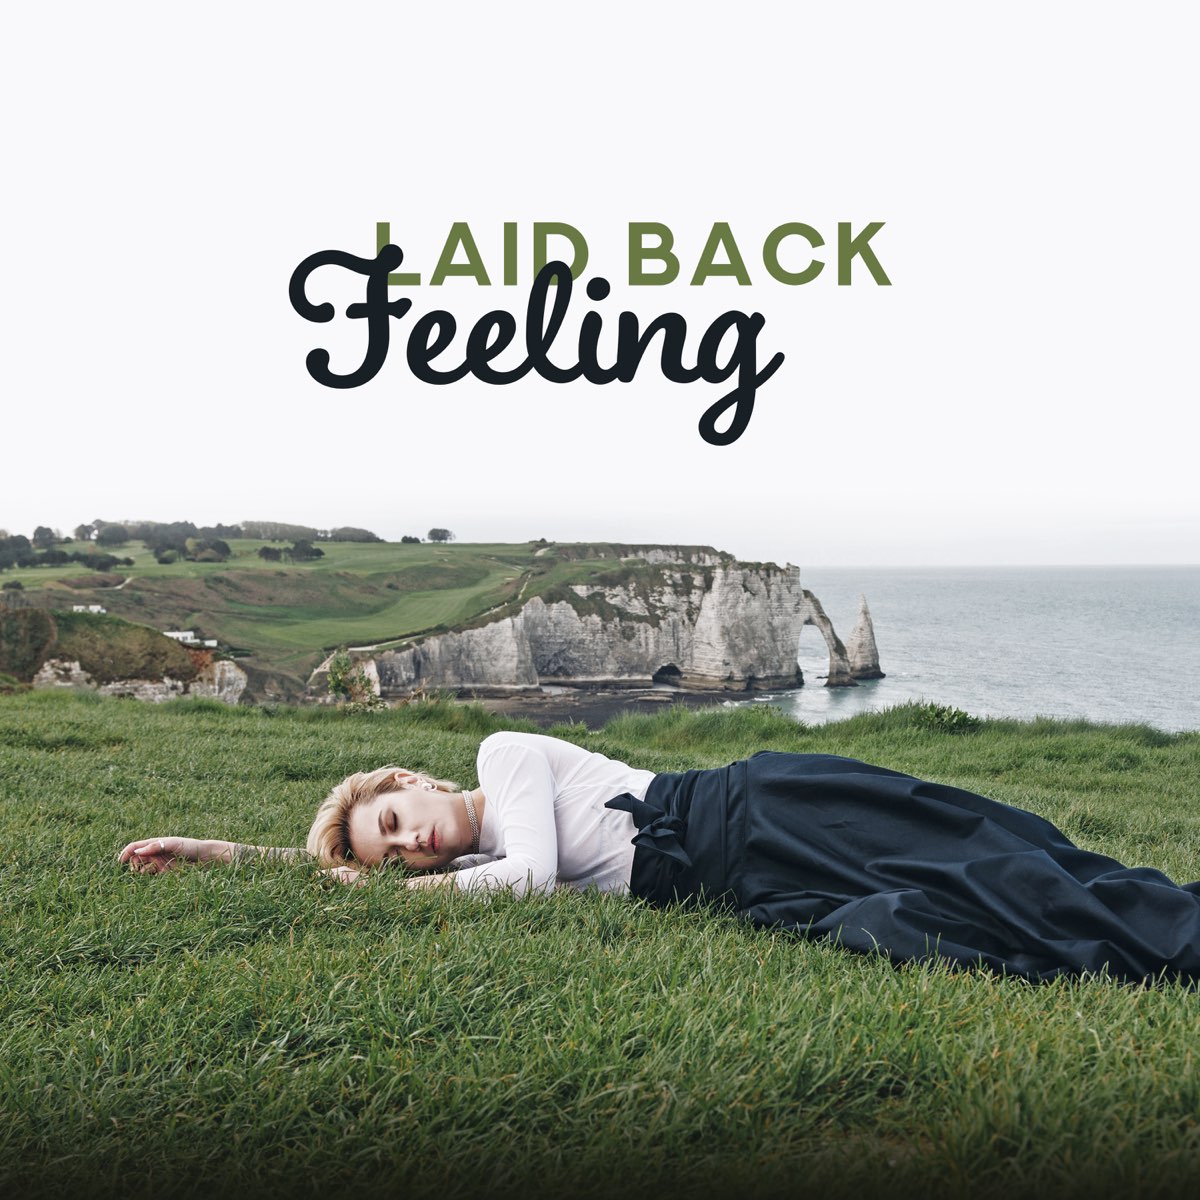 Laid back life. Feeling бак. Laid back. Laid back - Healing feeling (2019).